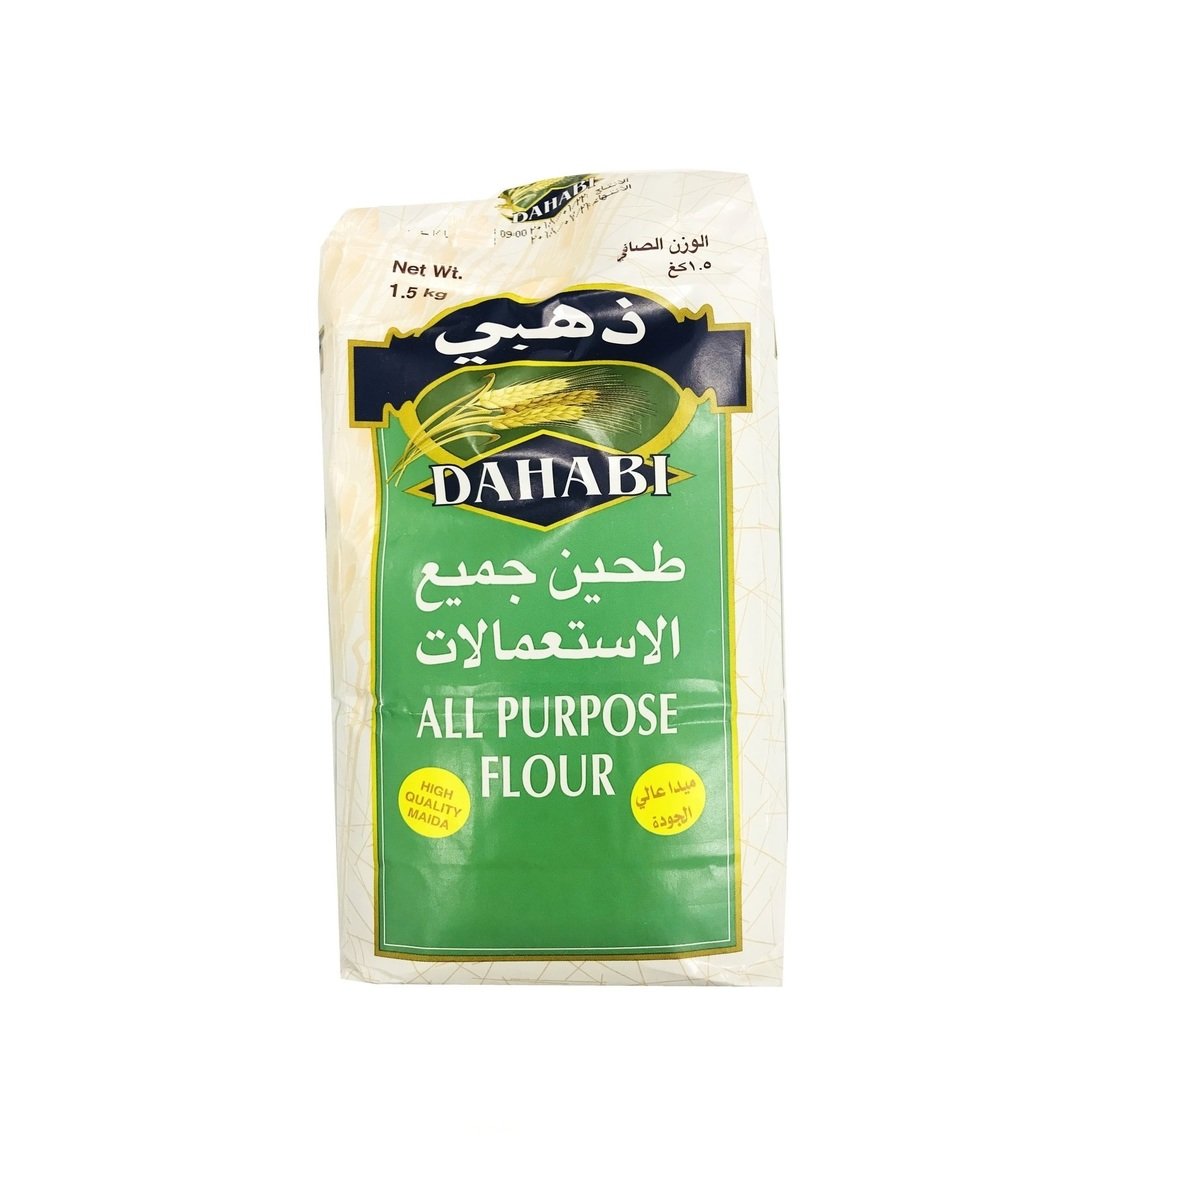 Dahabi All Purpose Flour 1.5kg